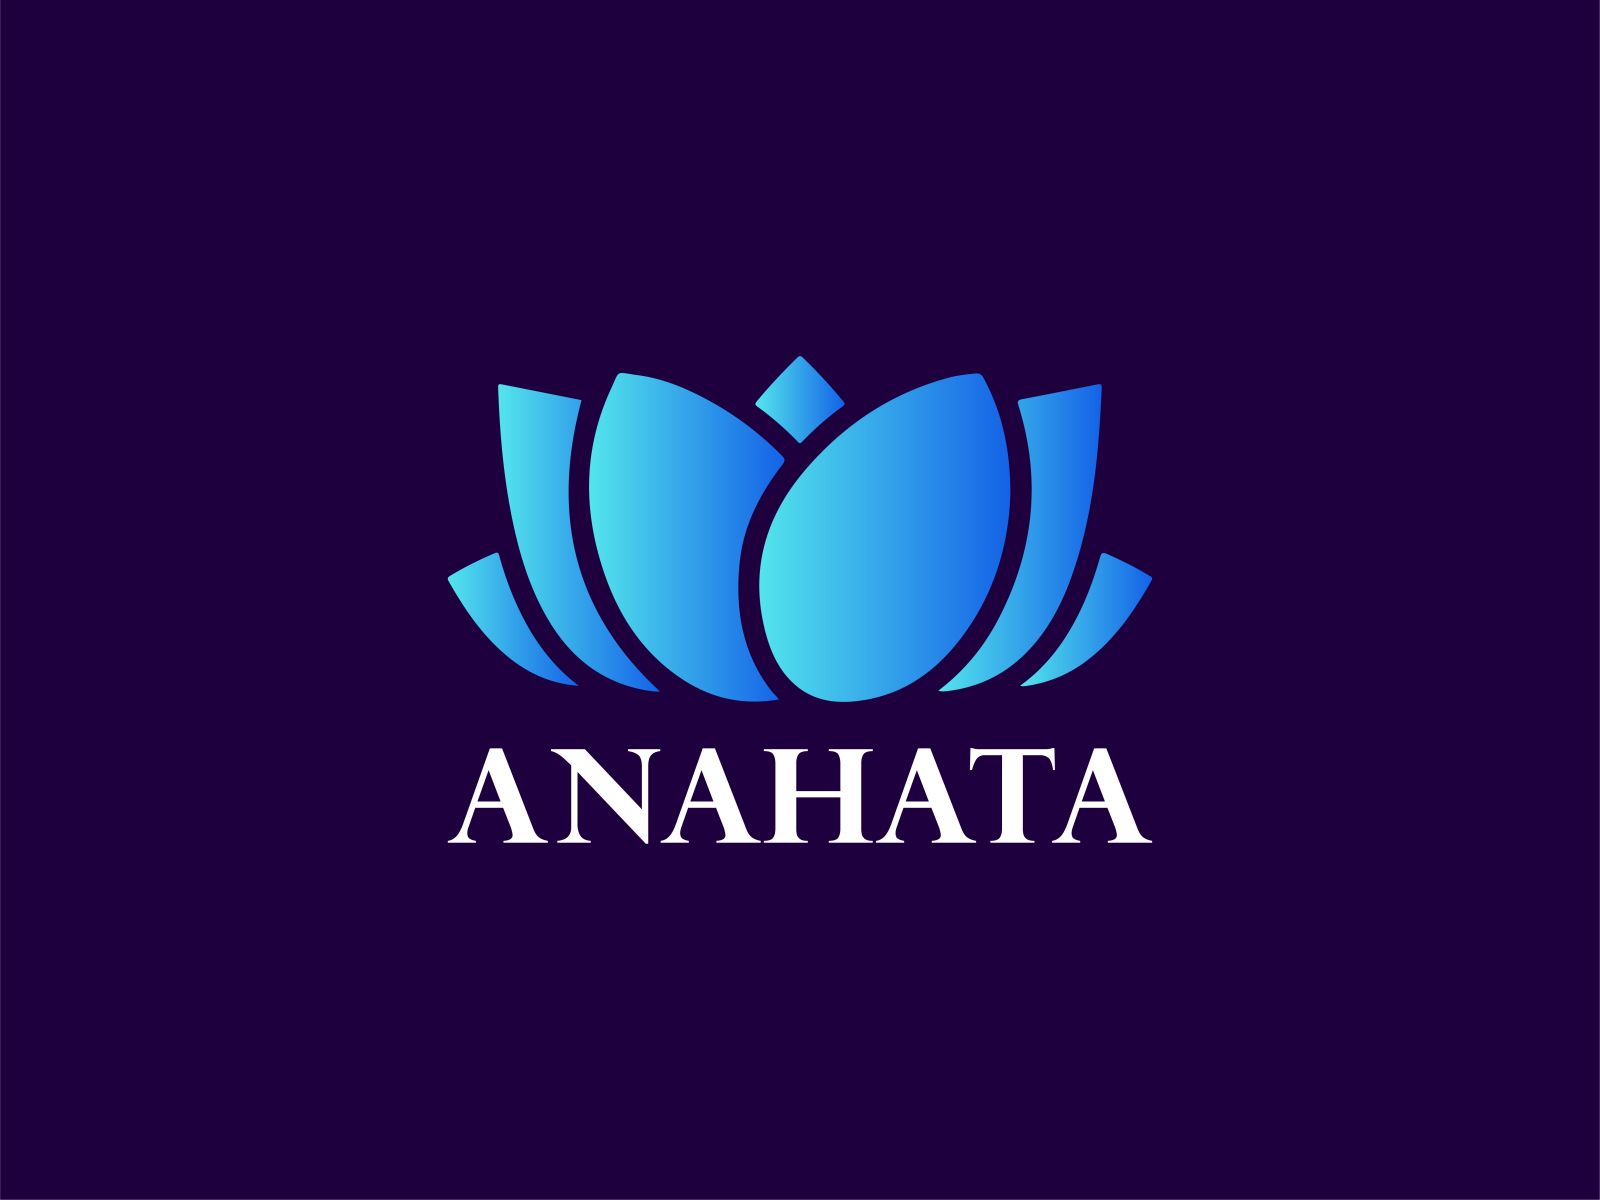 Anahata Logo Design by Rakibul Hasan🌏 on Dribbble